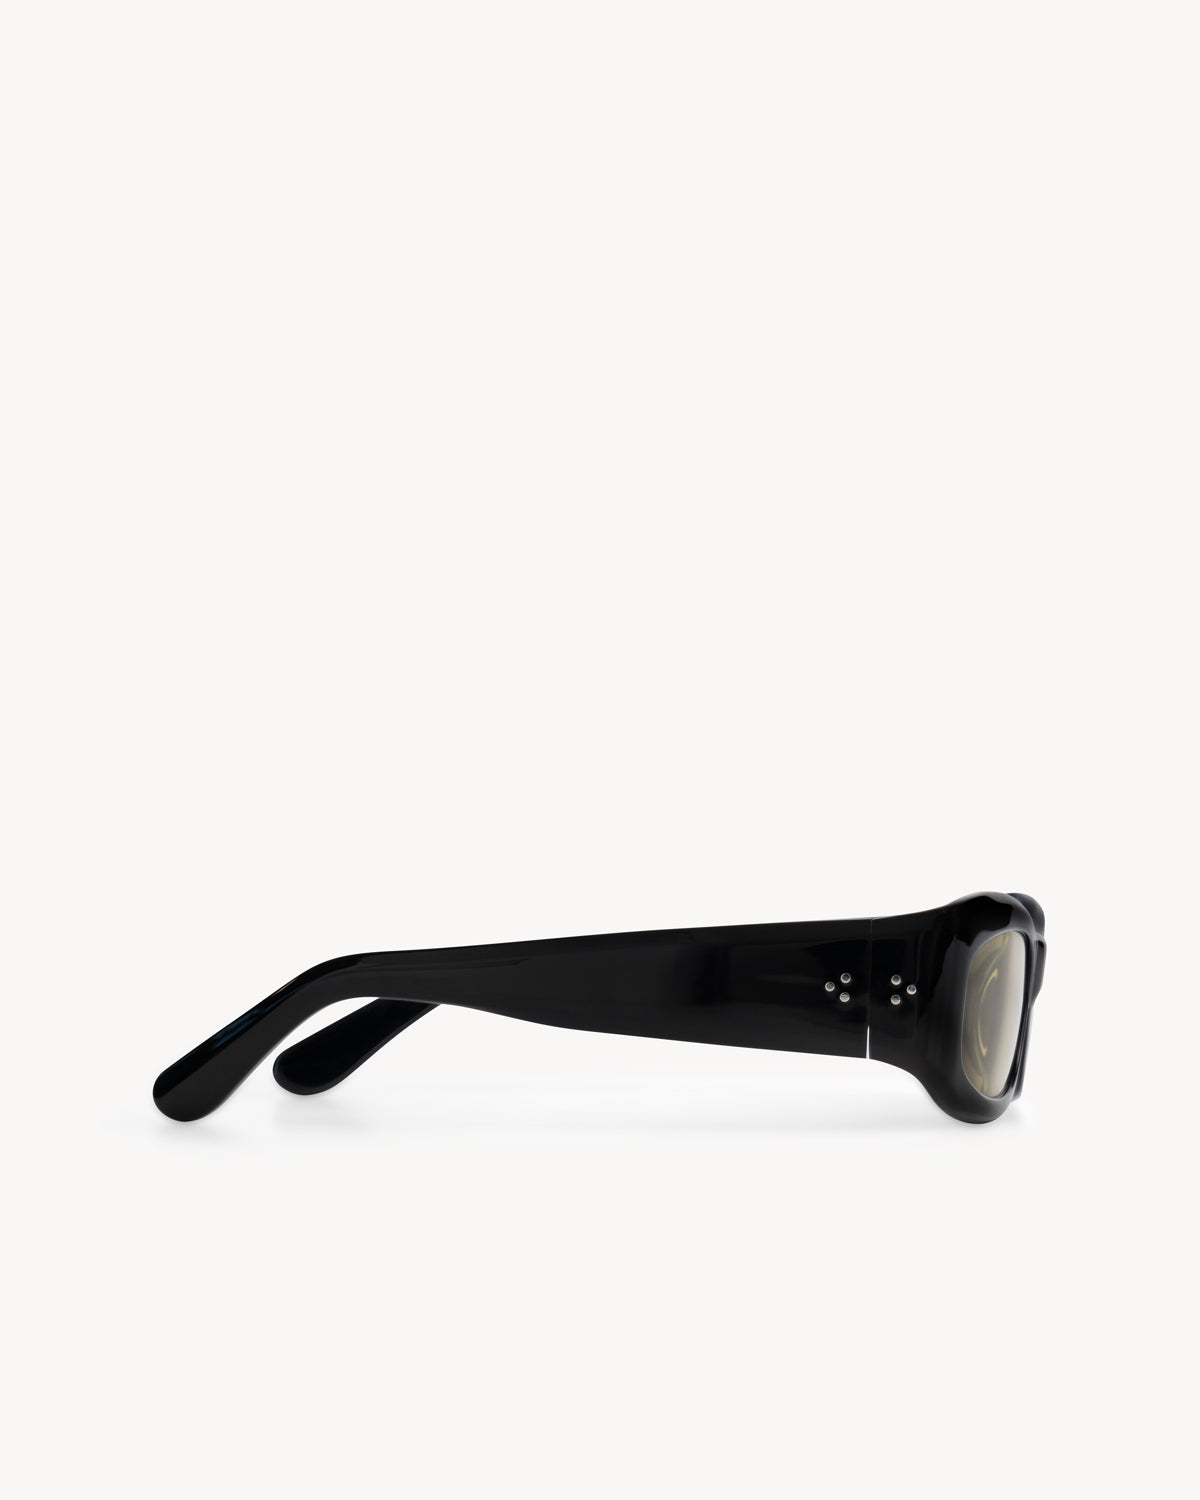 Port Tanger Saudade Sunglasses in Black Acetate and Warm Olive Lenses 4